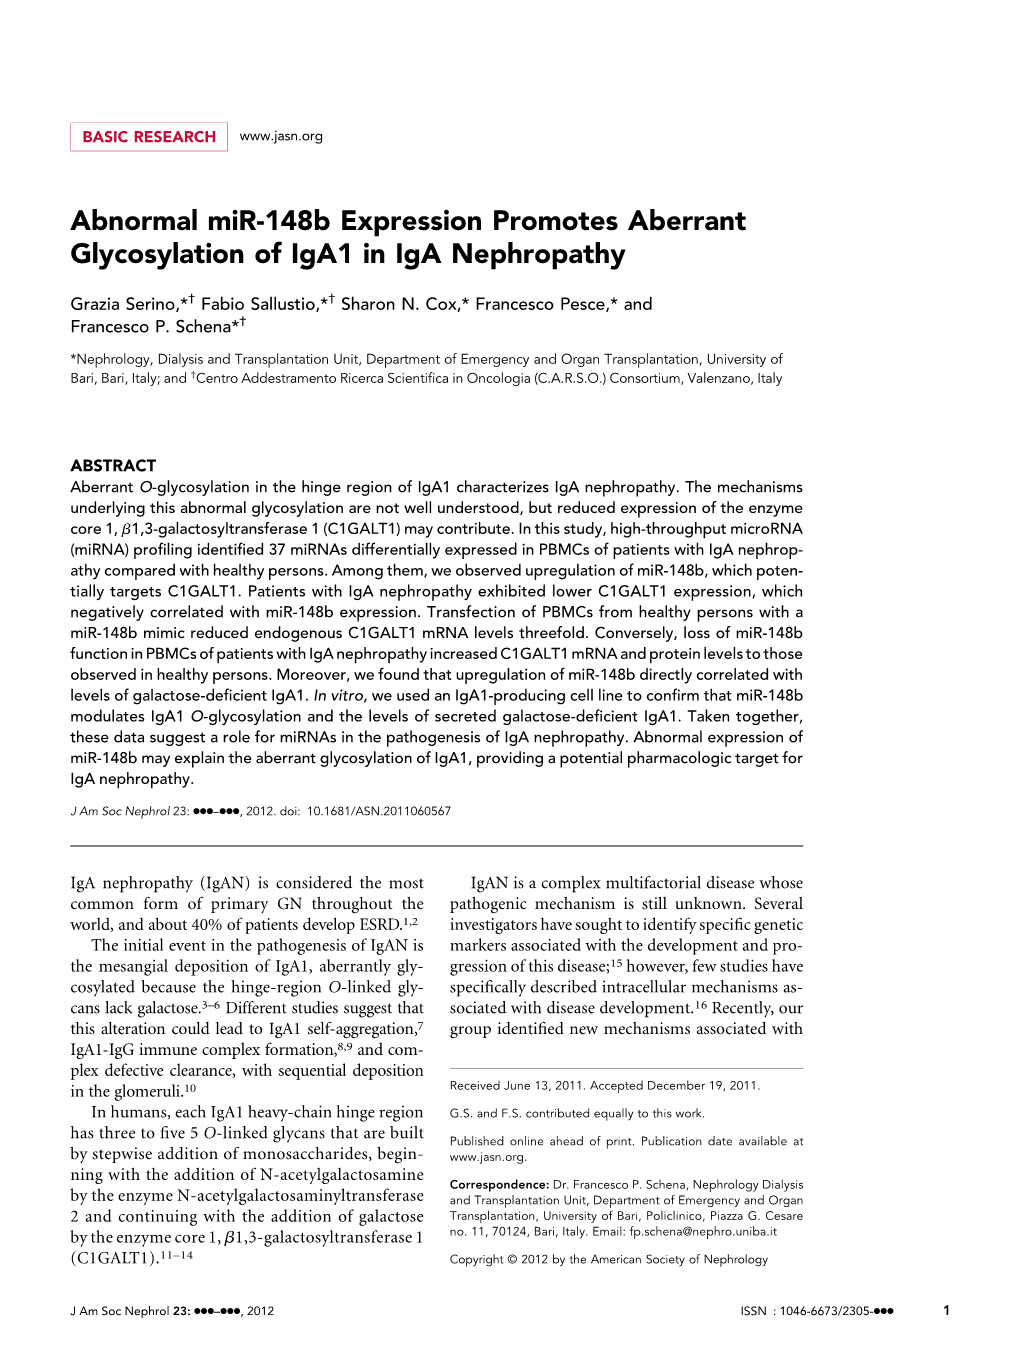 Abnormal Mir-148B Expression Promotes Aberrant Glycosylation of Iga1 in Iga Nephropathy